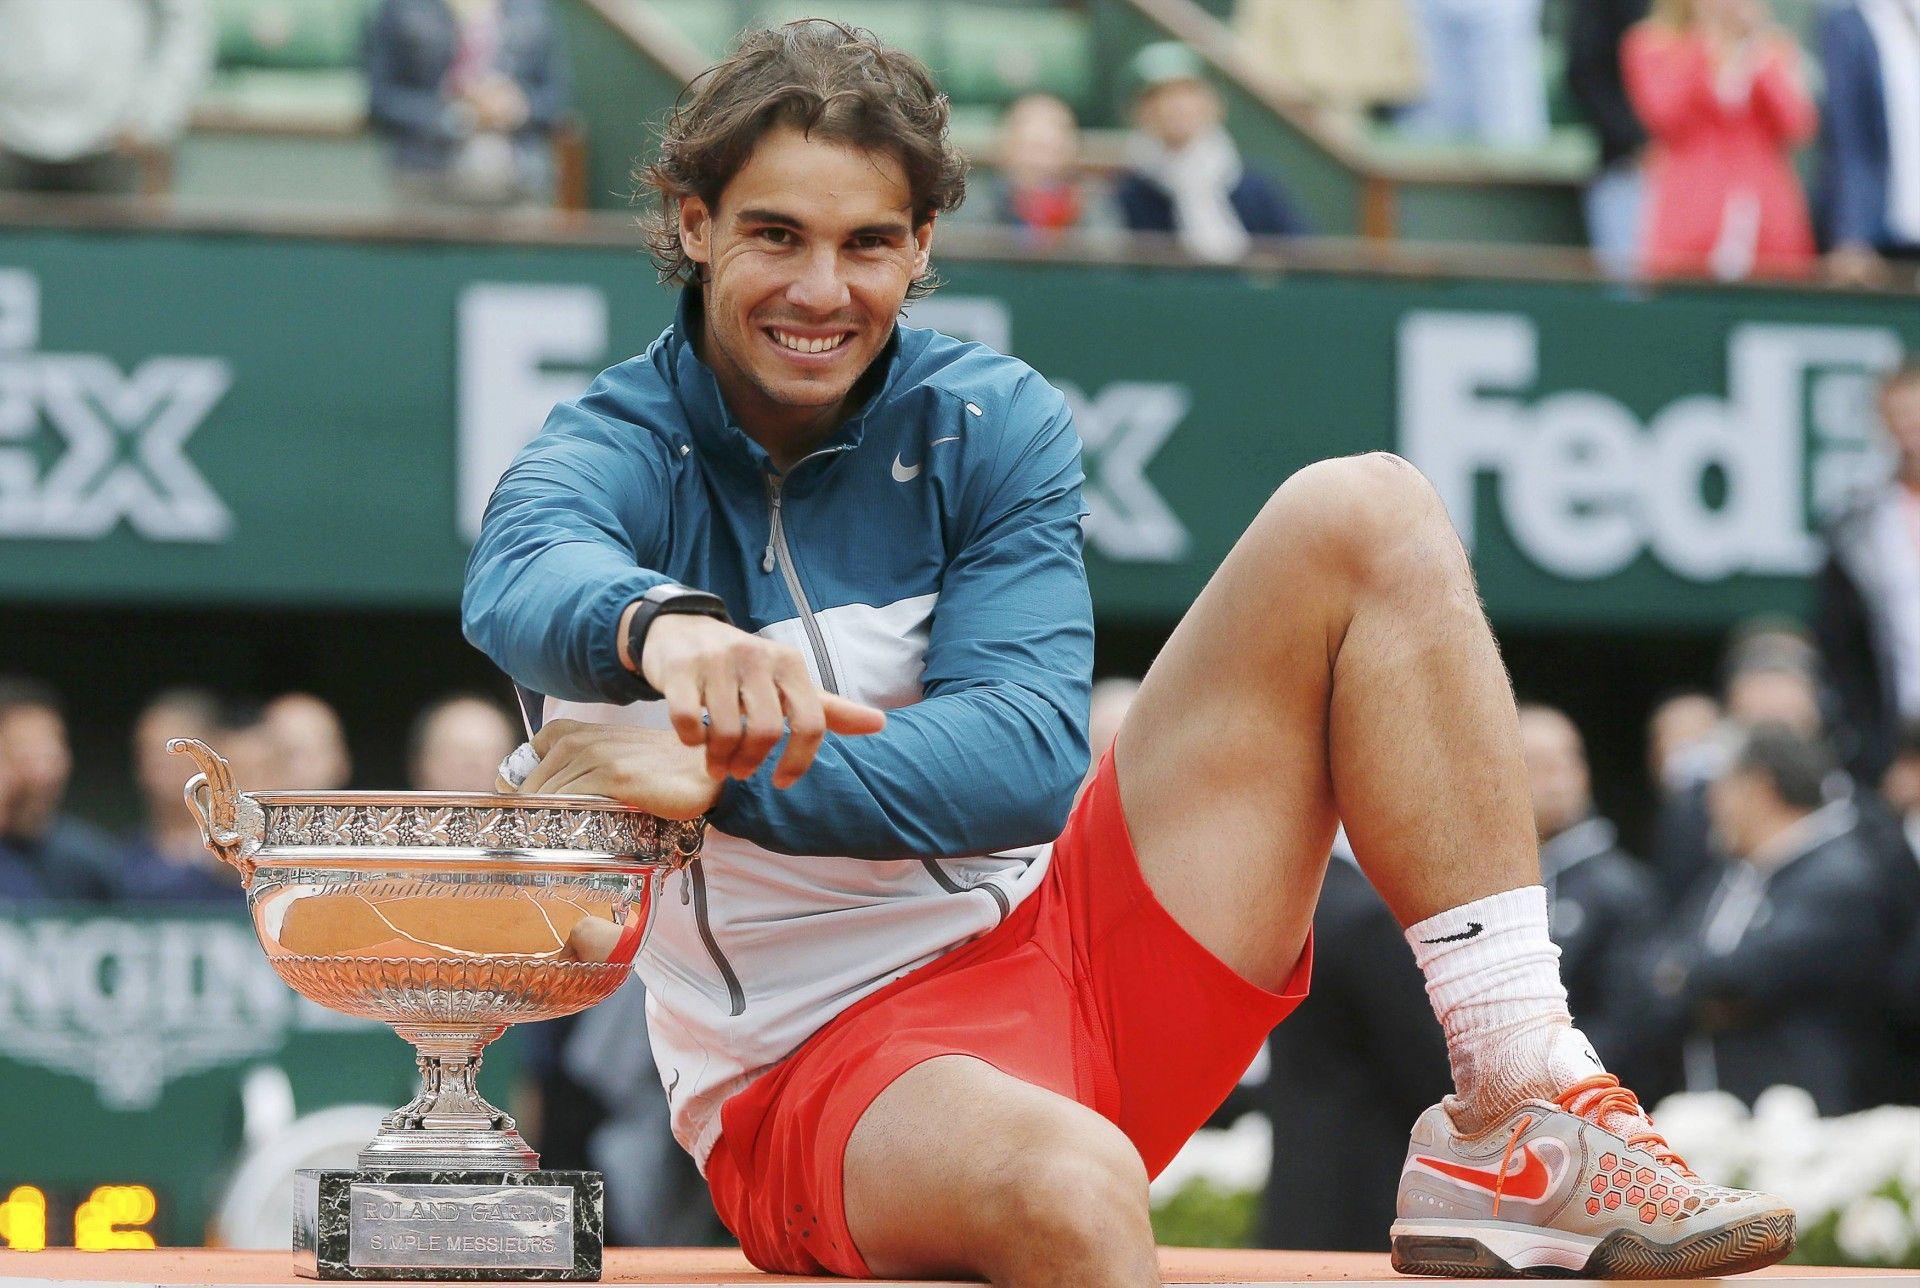 Rafael Nadal French Open 2013. Book i read. Nadal